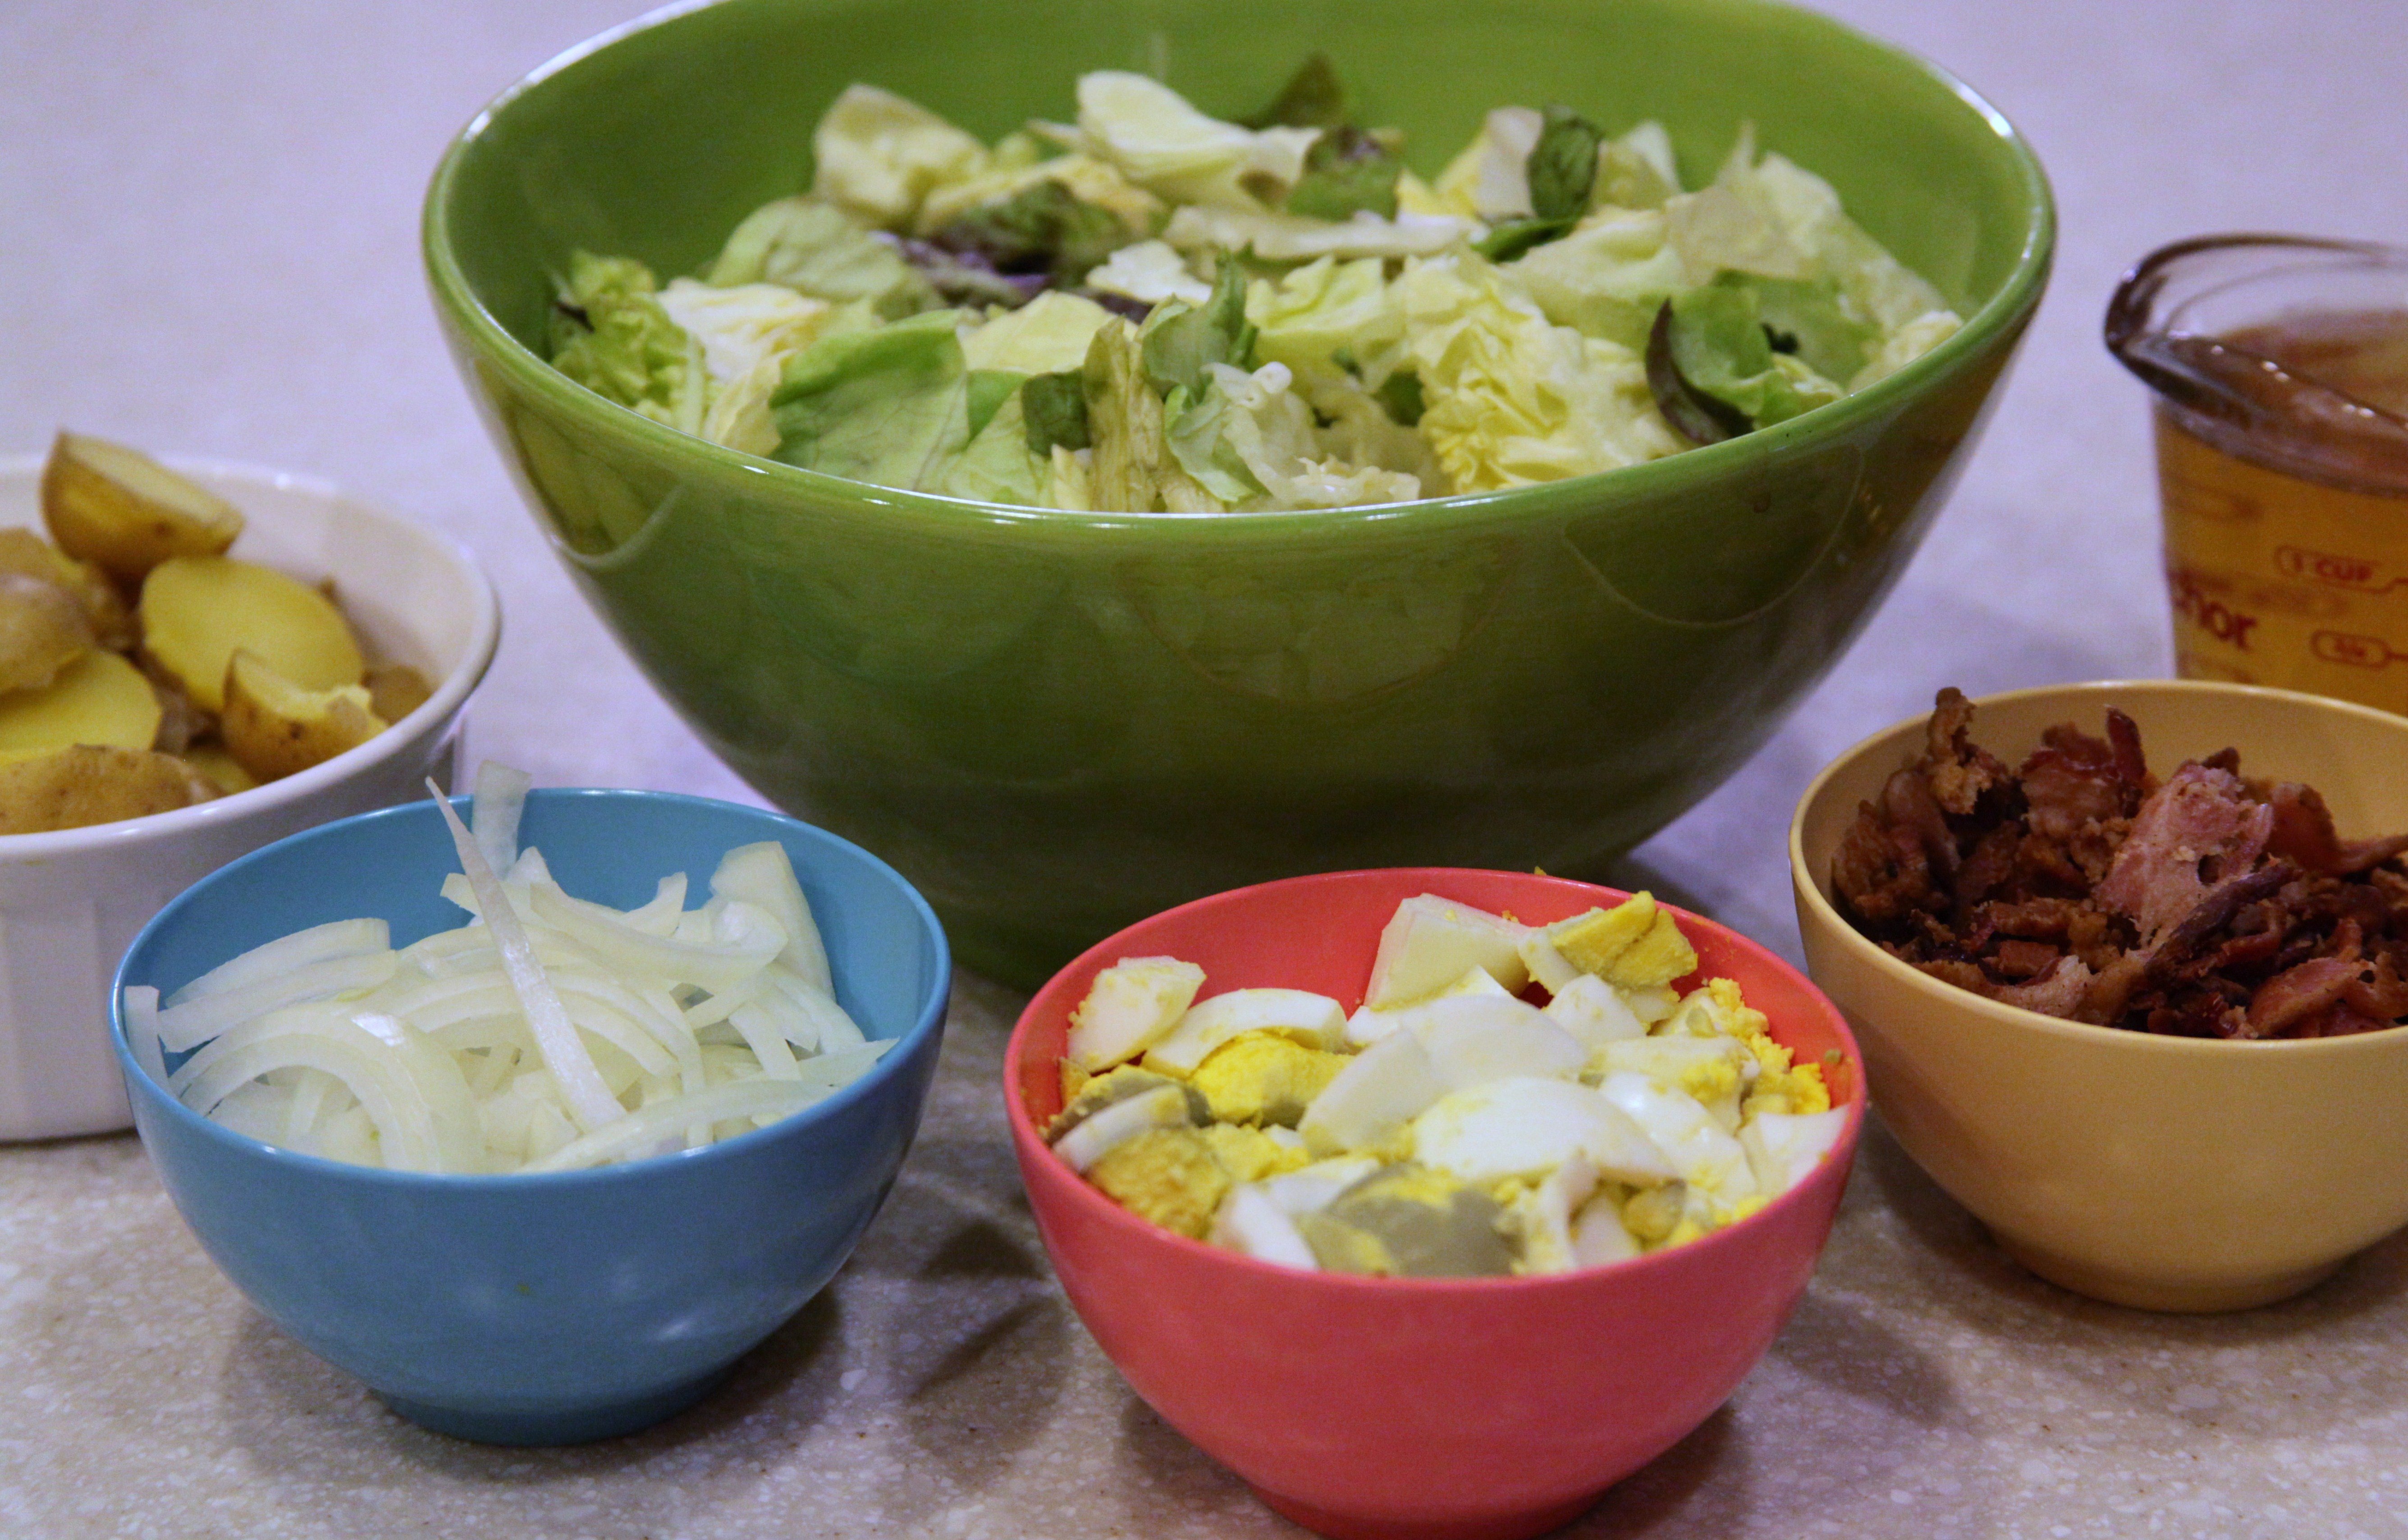 Bacon Egg and Potato Salad Ingredients